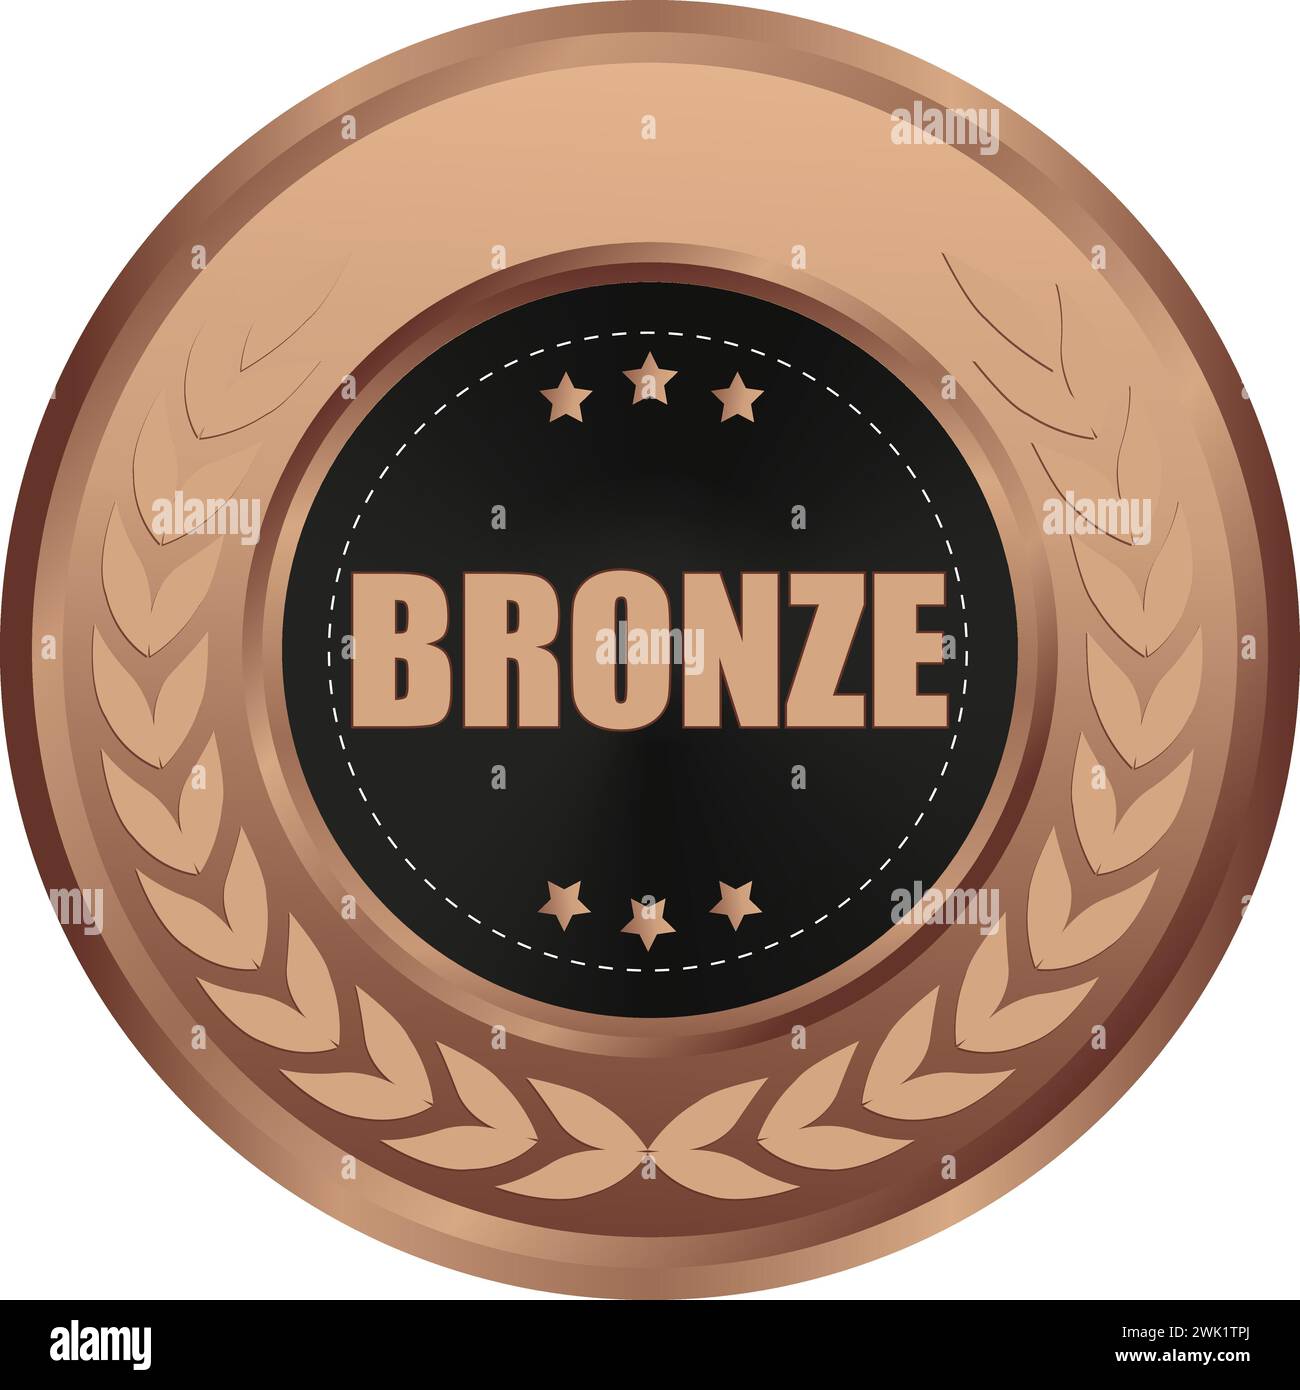 Realistic Bronze Medal Vector, Bronze Award, Prize, Bronze Challenge Award, Medal Award winner, trophy, Bronze Coin winner Stock Vector